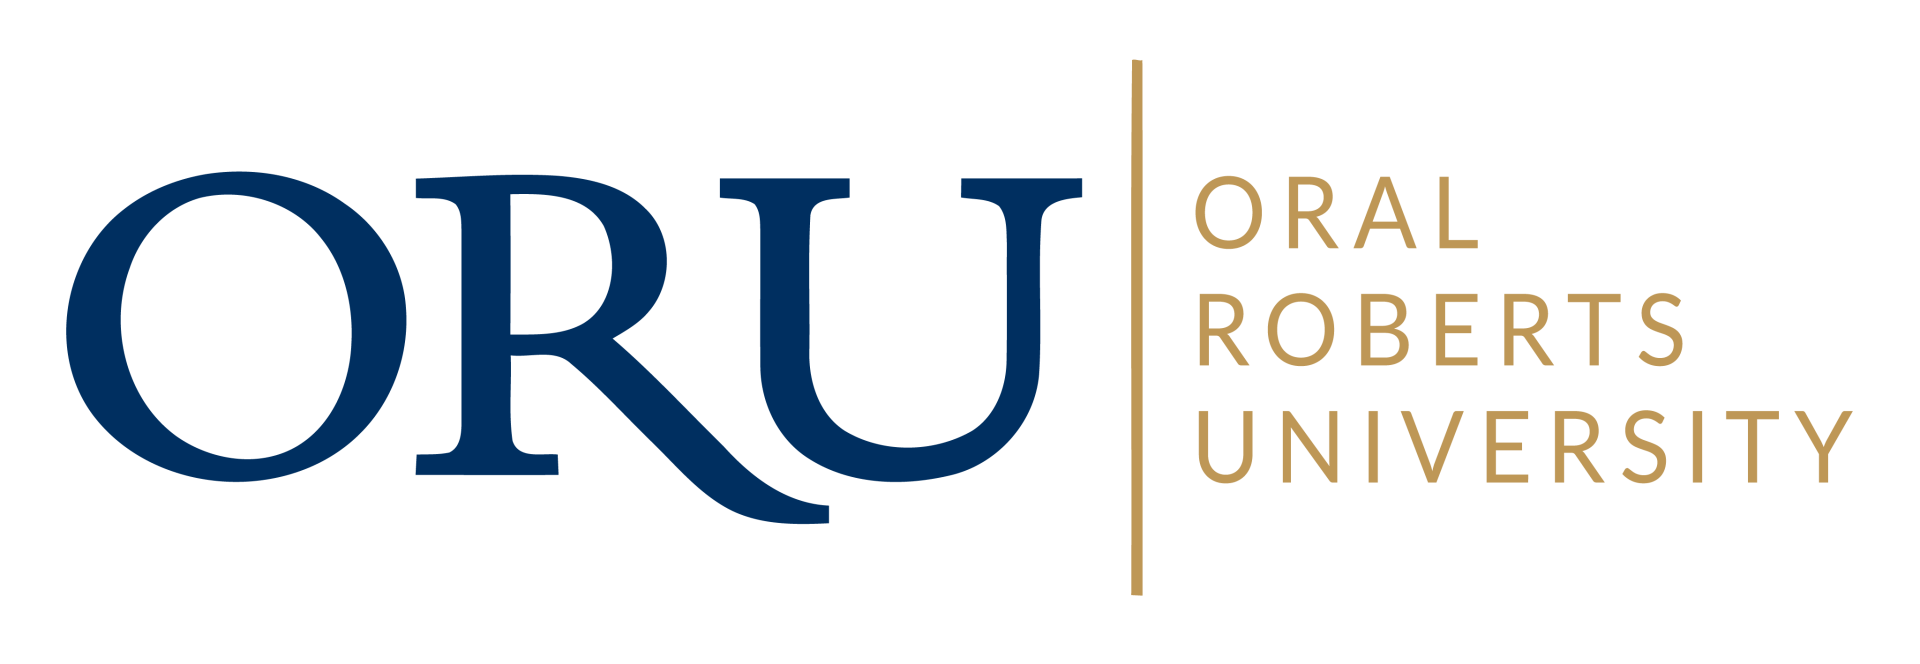 Premier Club Members | Worldwide College Tours | Oral Roberts University